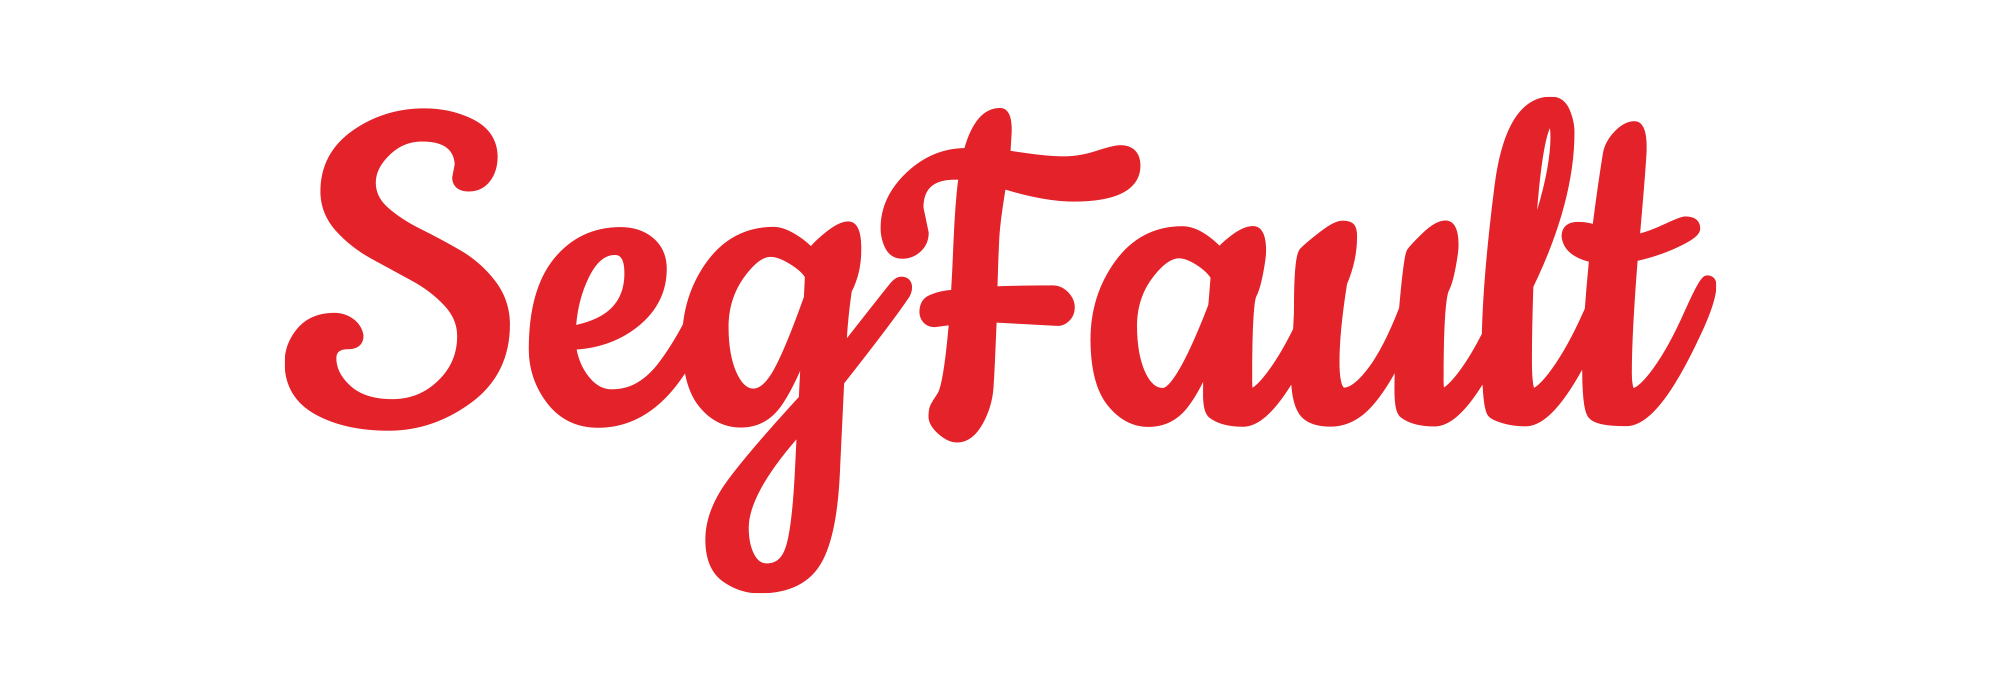 SegFault